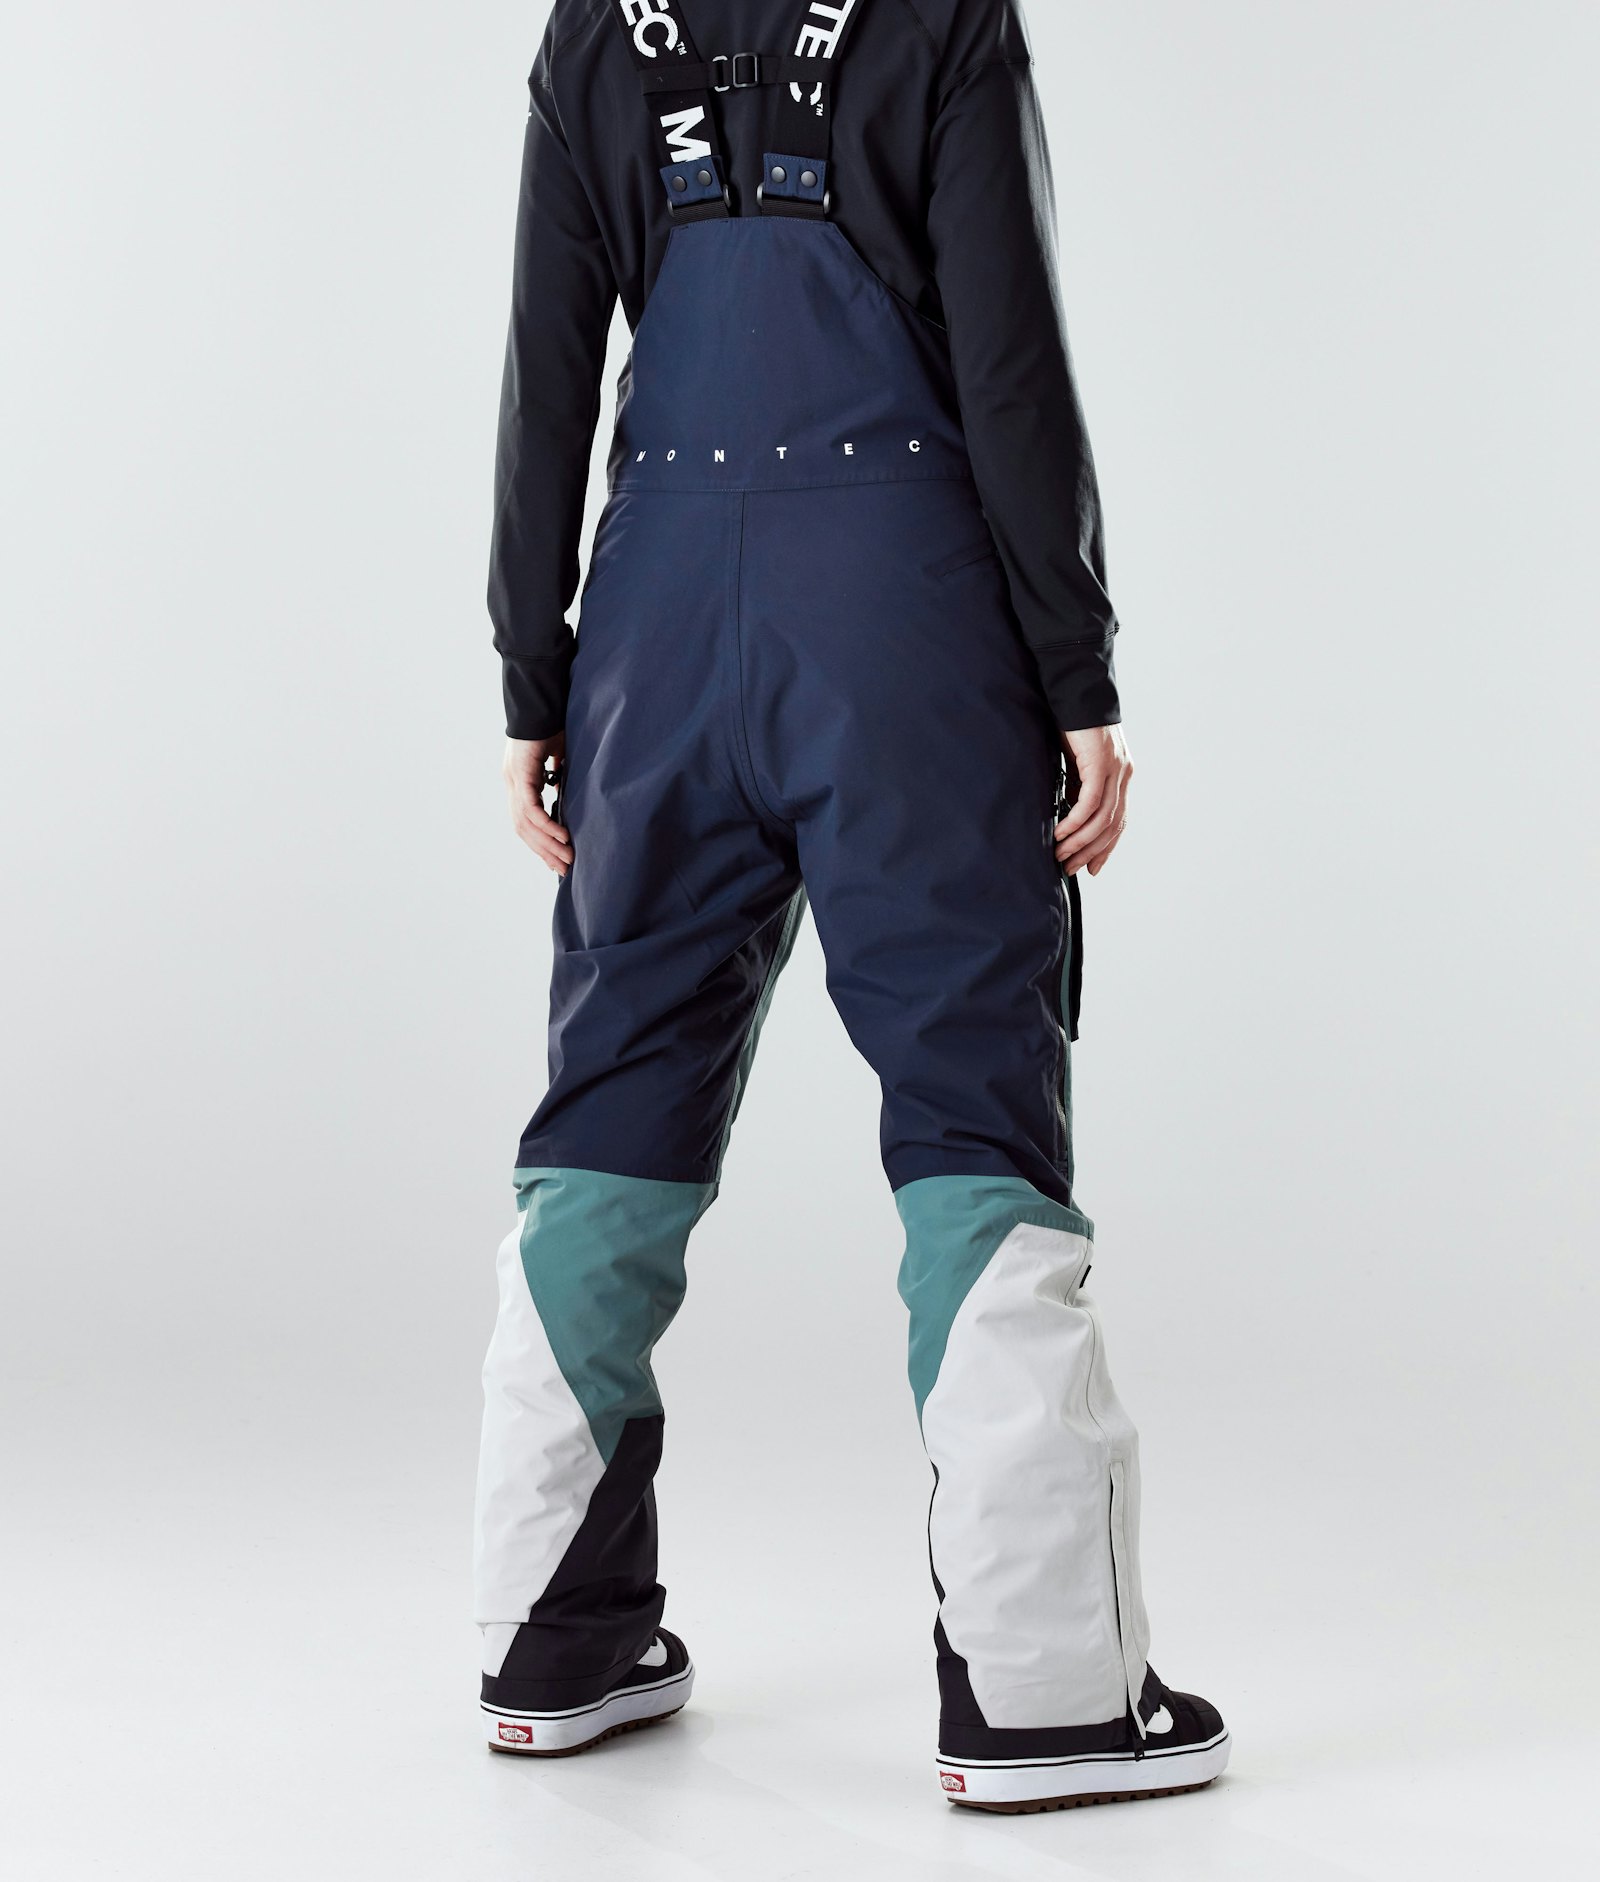 Montec Fawk W 2020 Pantalones Snowboard Mujer Marine/Atlantic/Light Grey